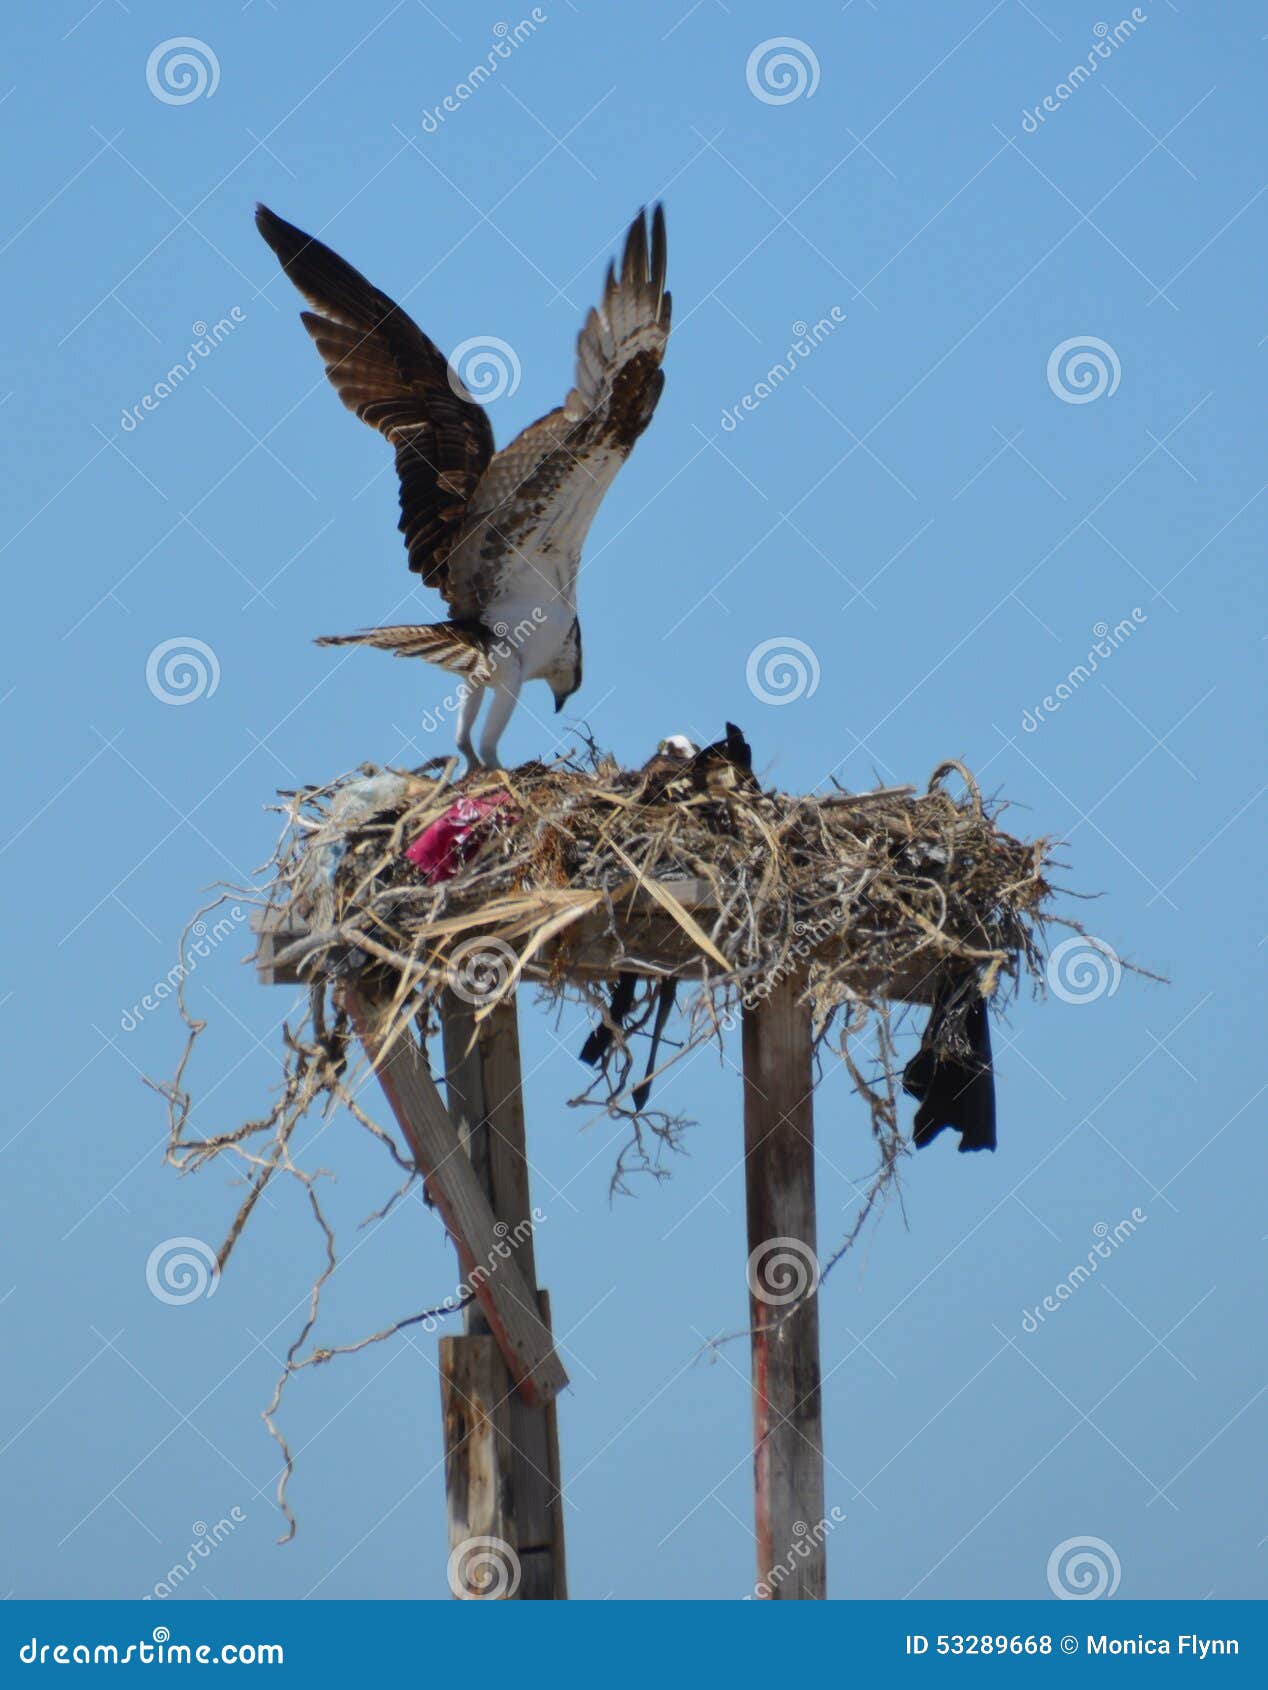 osprey in the nest in guerro negro in baja california del sur, mexico